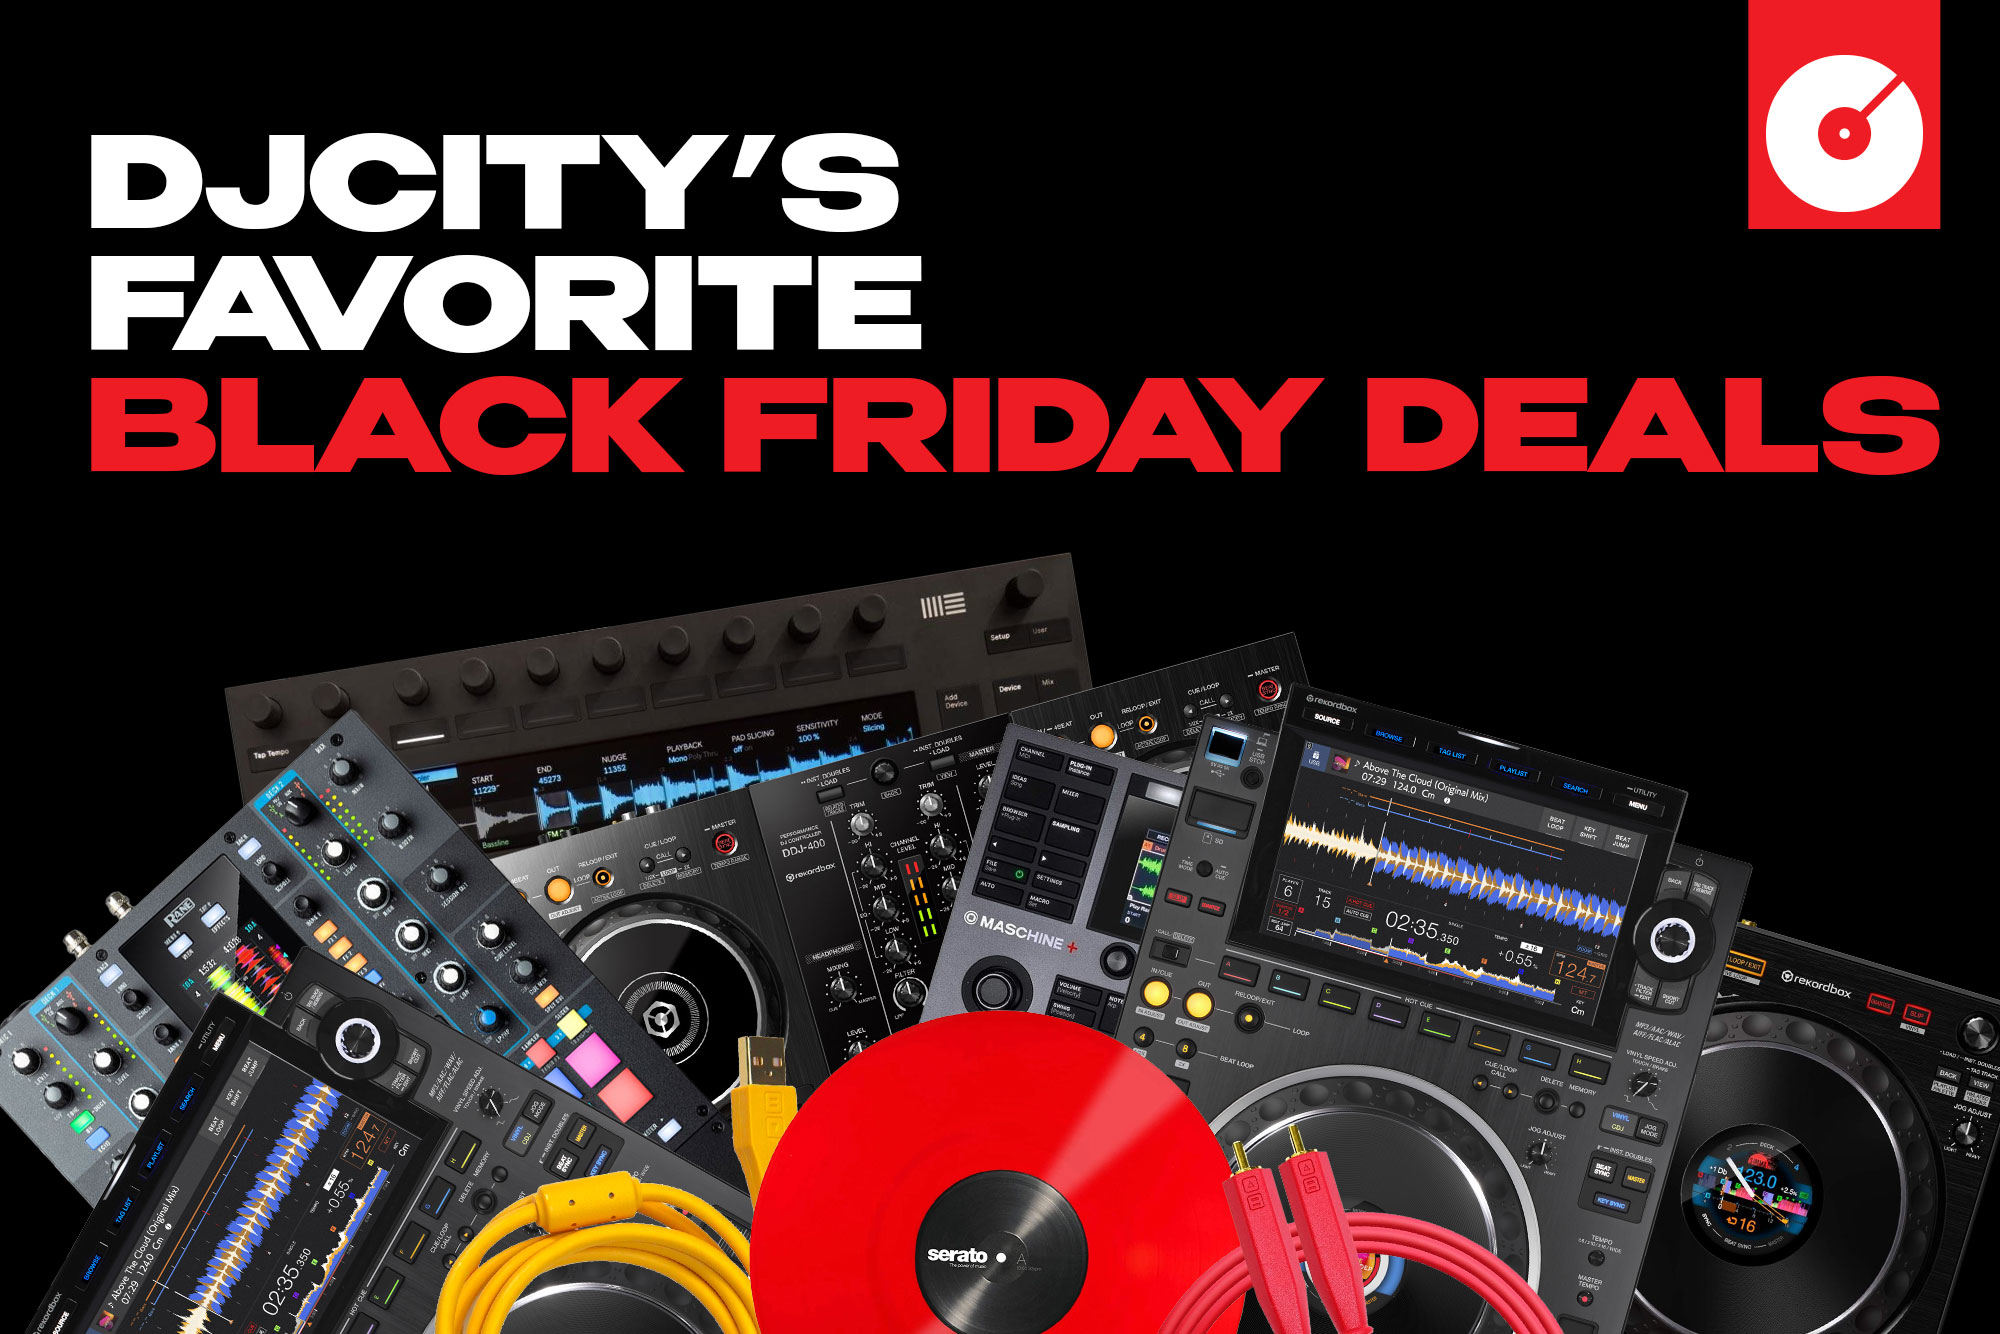 DJcity's Favorite Black Friday Deals